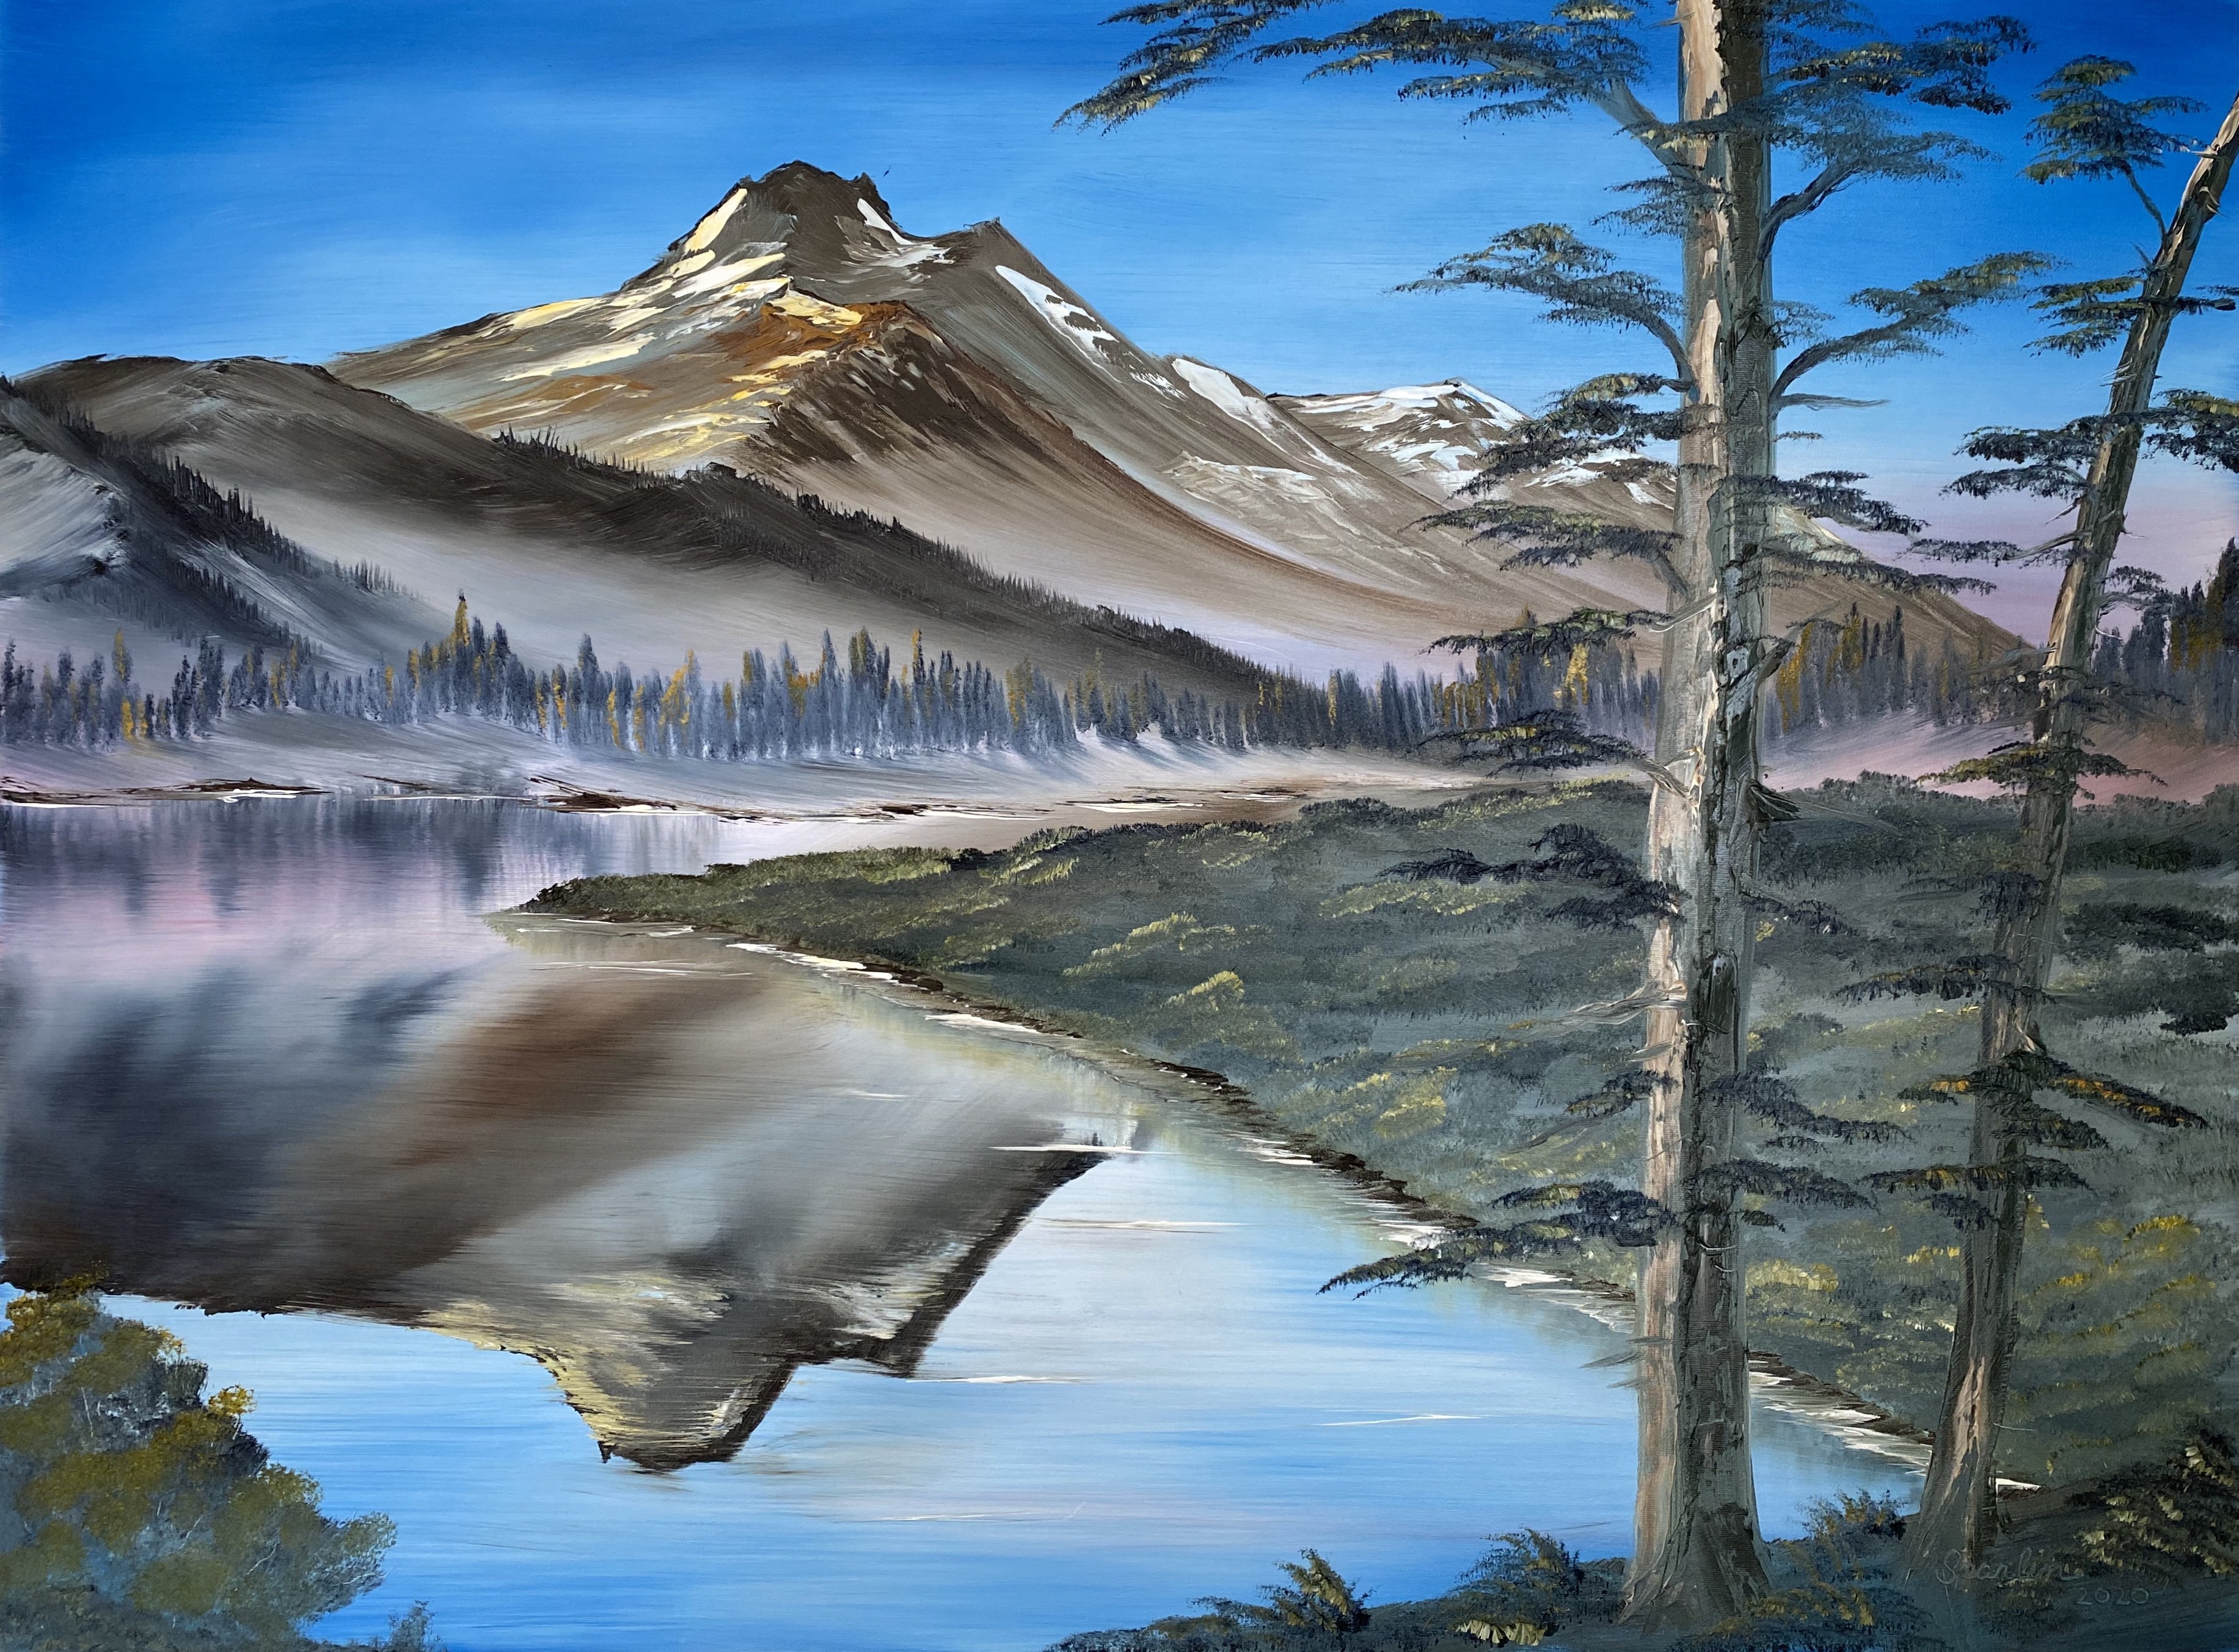 Fine Art - Oil Painting "Mount Jefferson" by Sonny Sinay